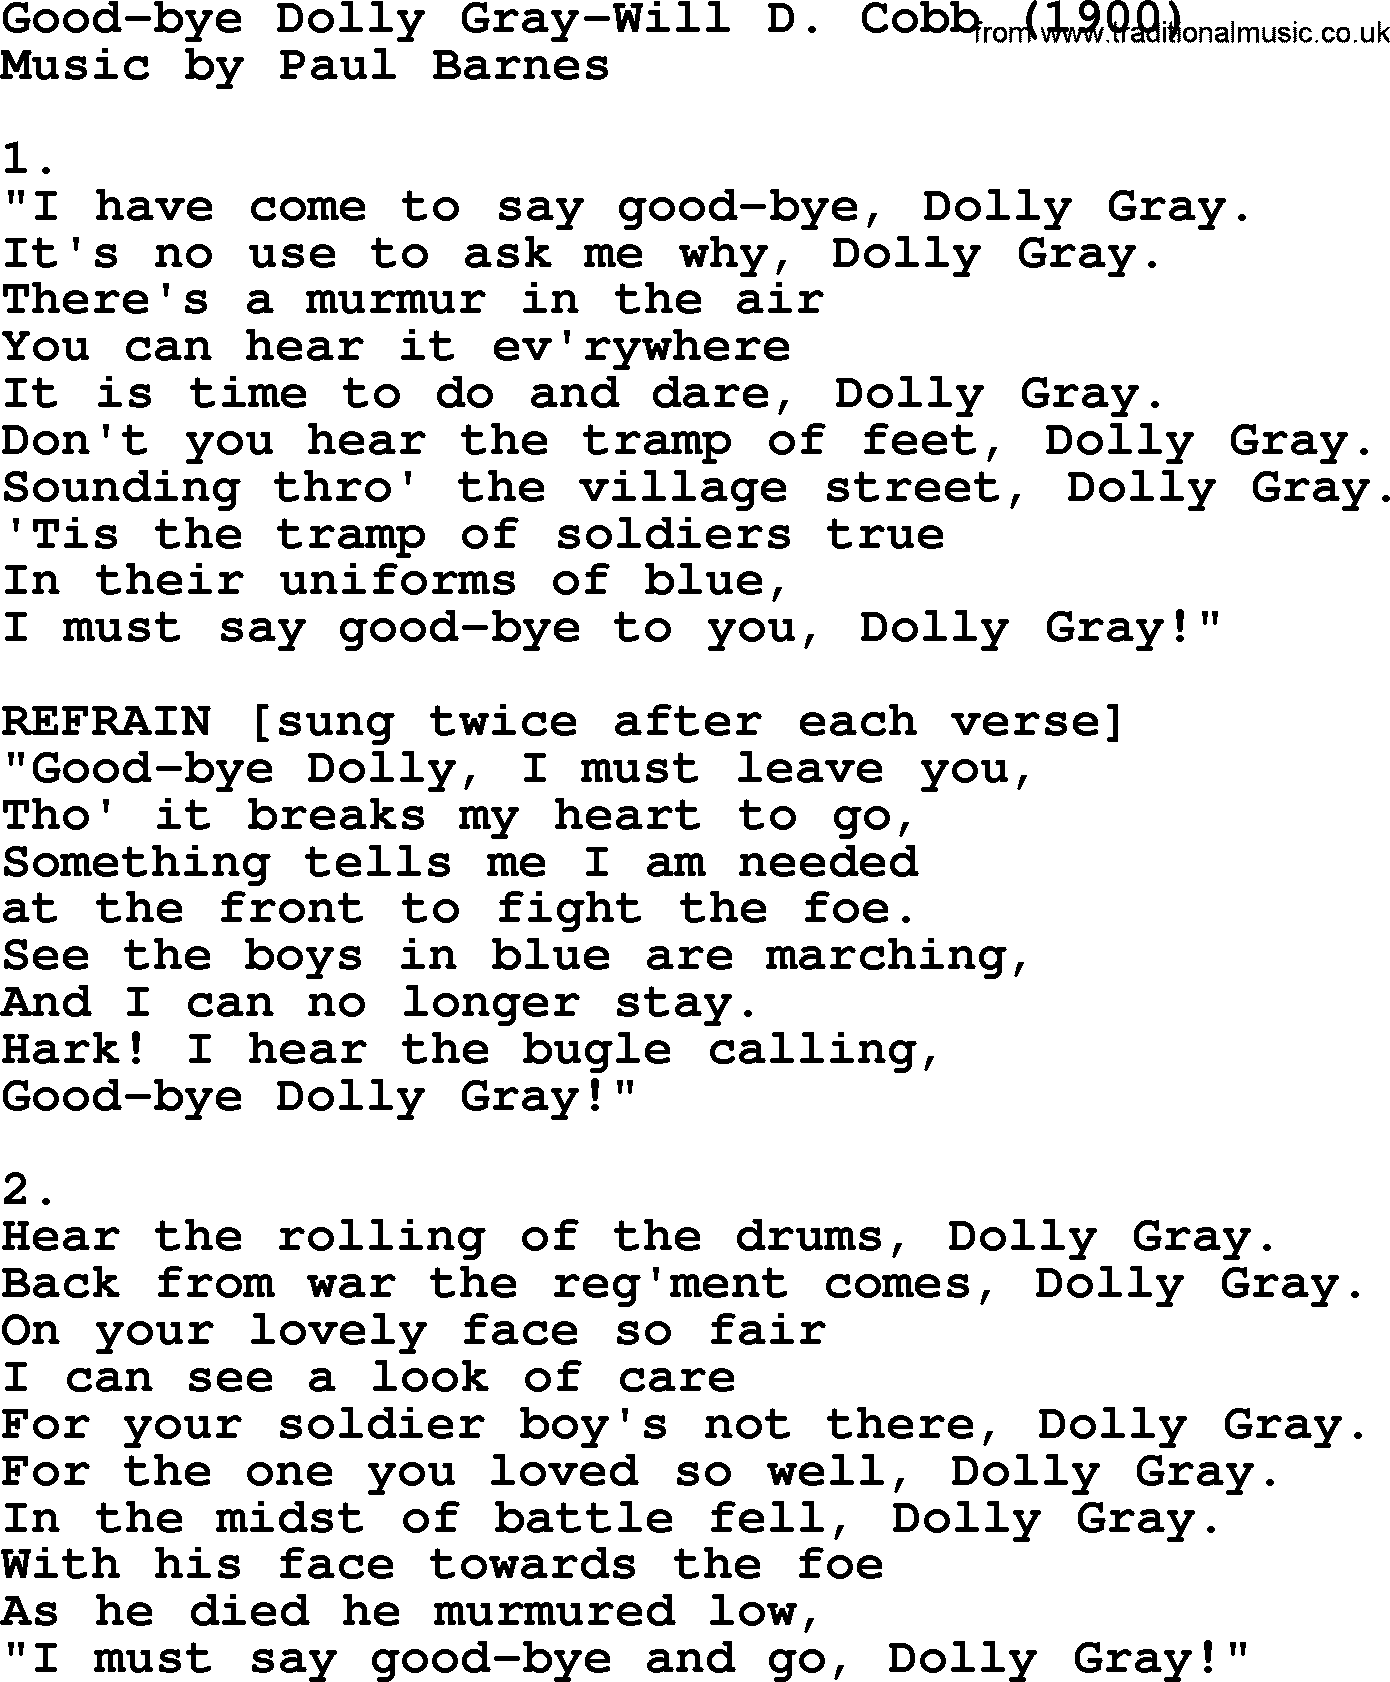 World War(WW1) One Song: Good-Bye Dolly Gray-Will D Cobb 1900, lyrics and PDF